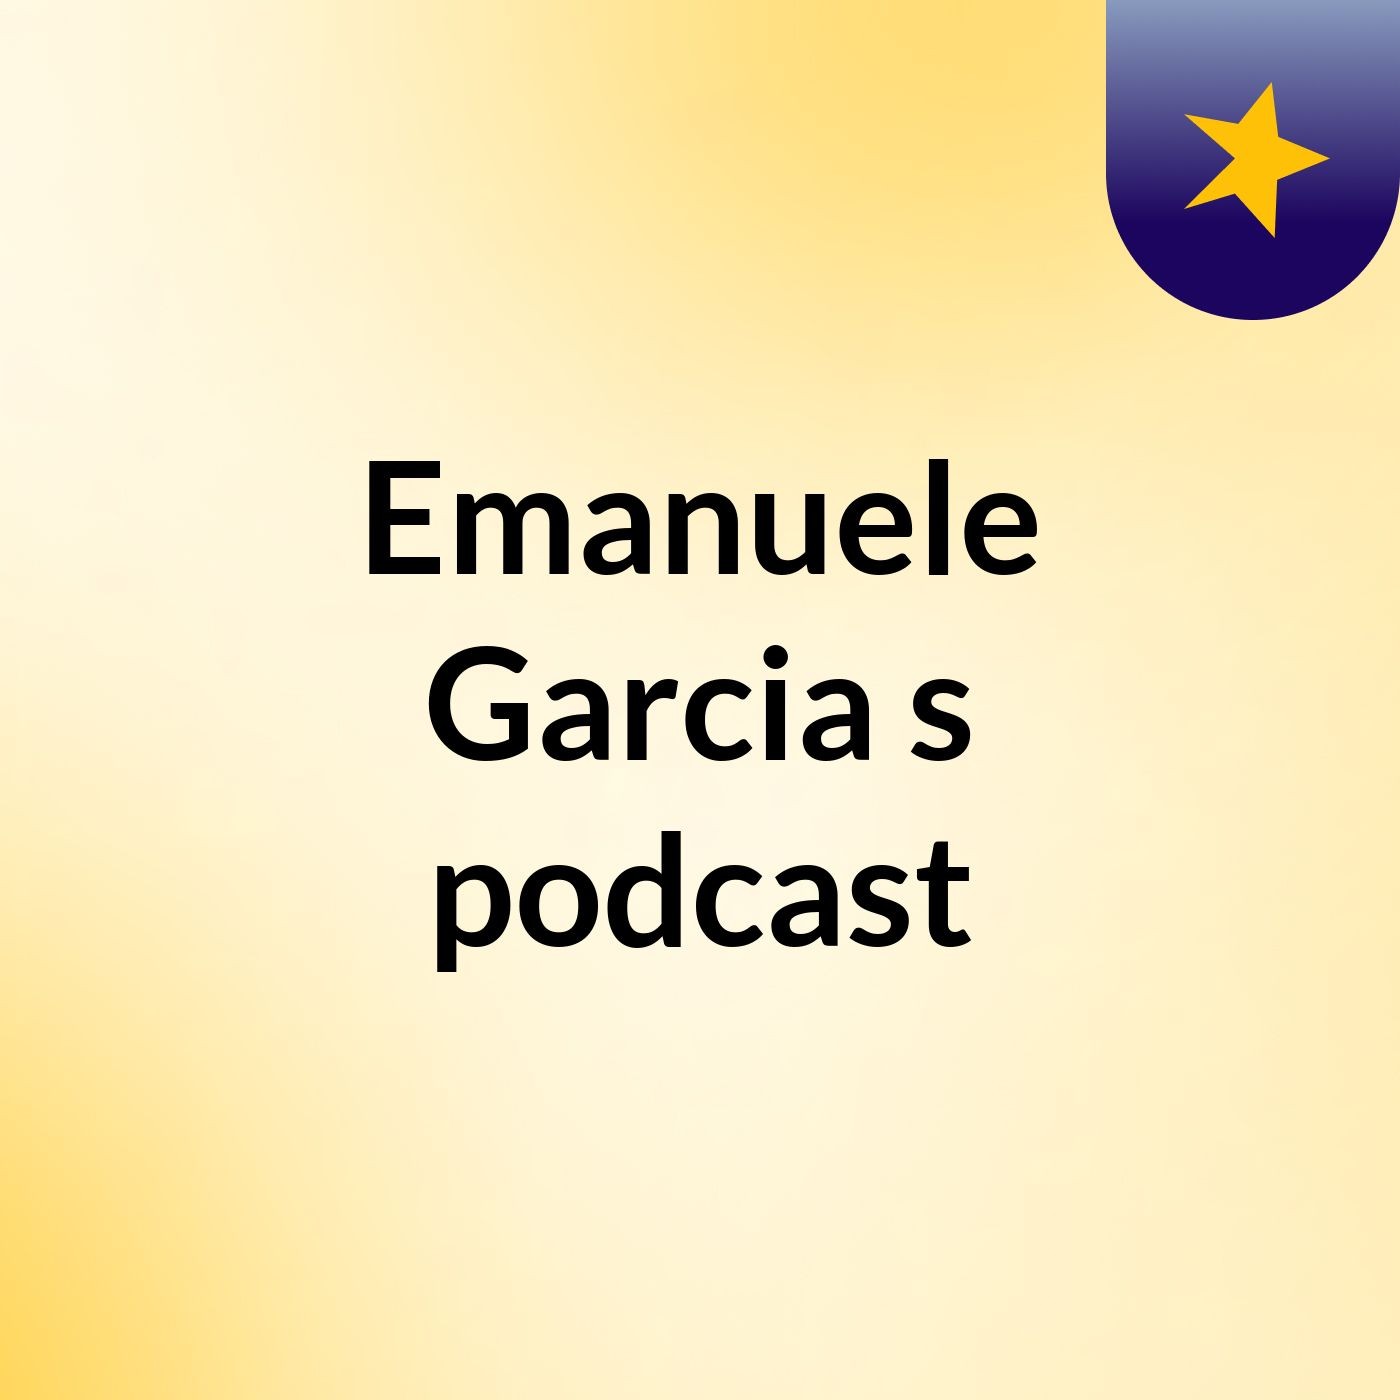 Emanuele Garcia's podcast